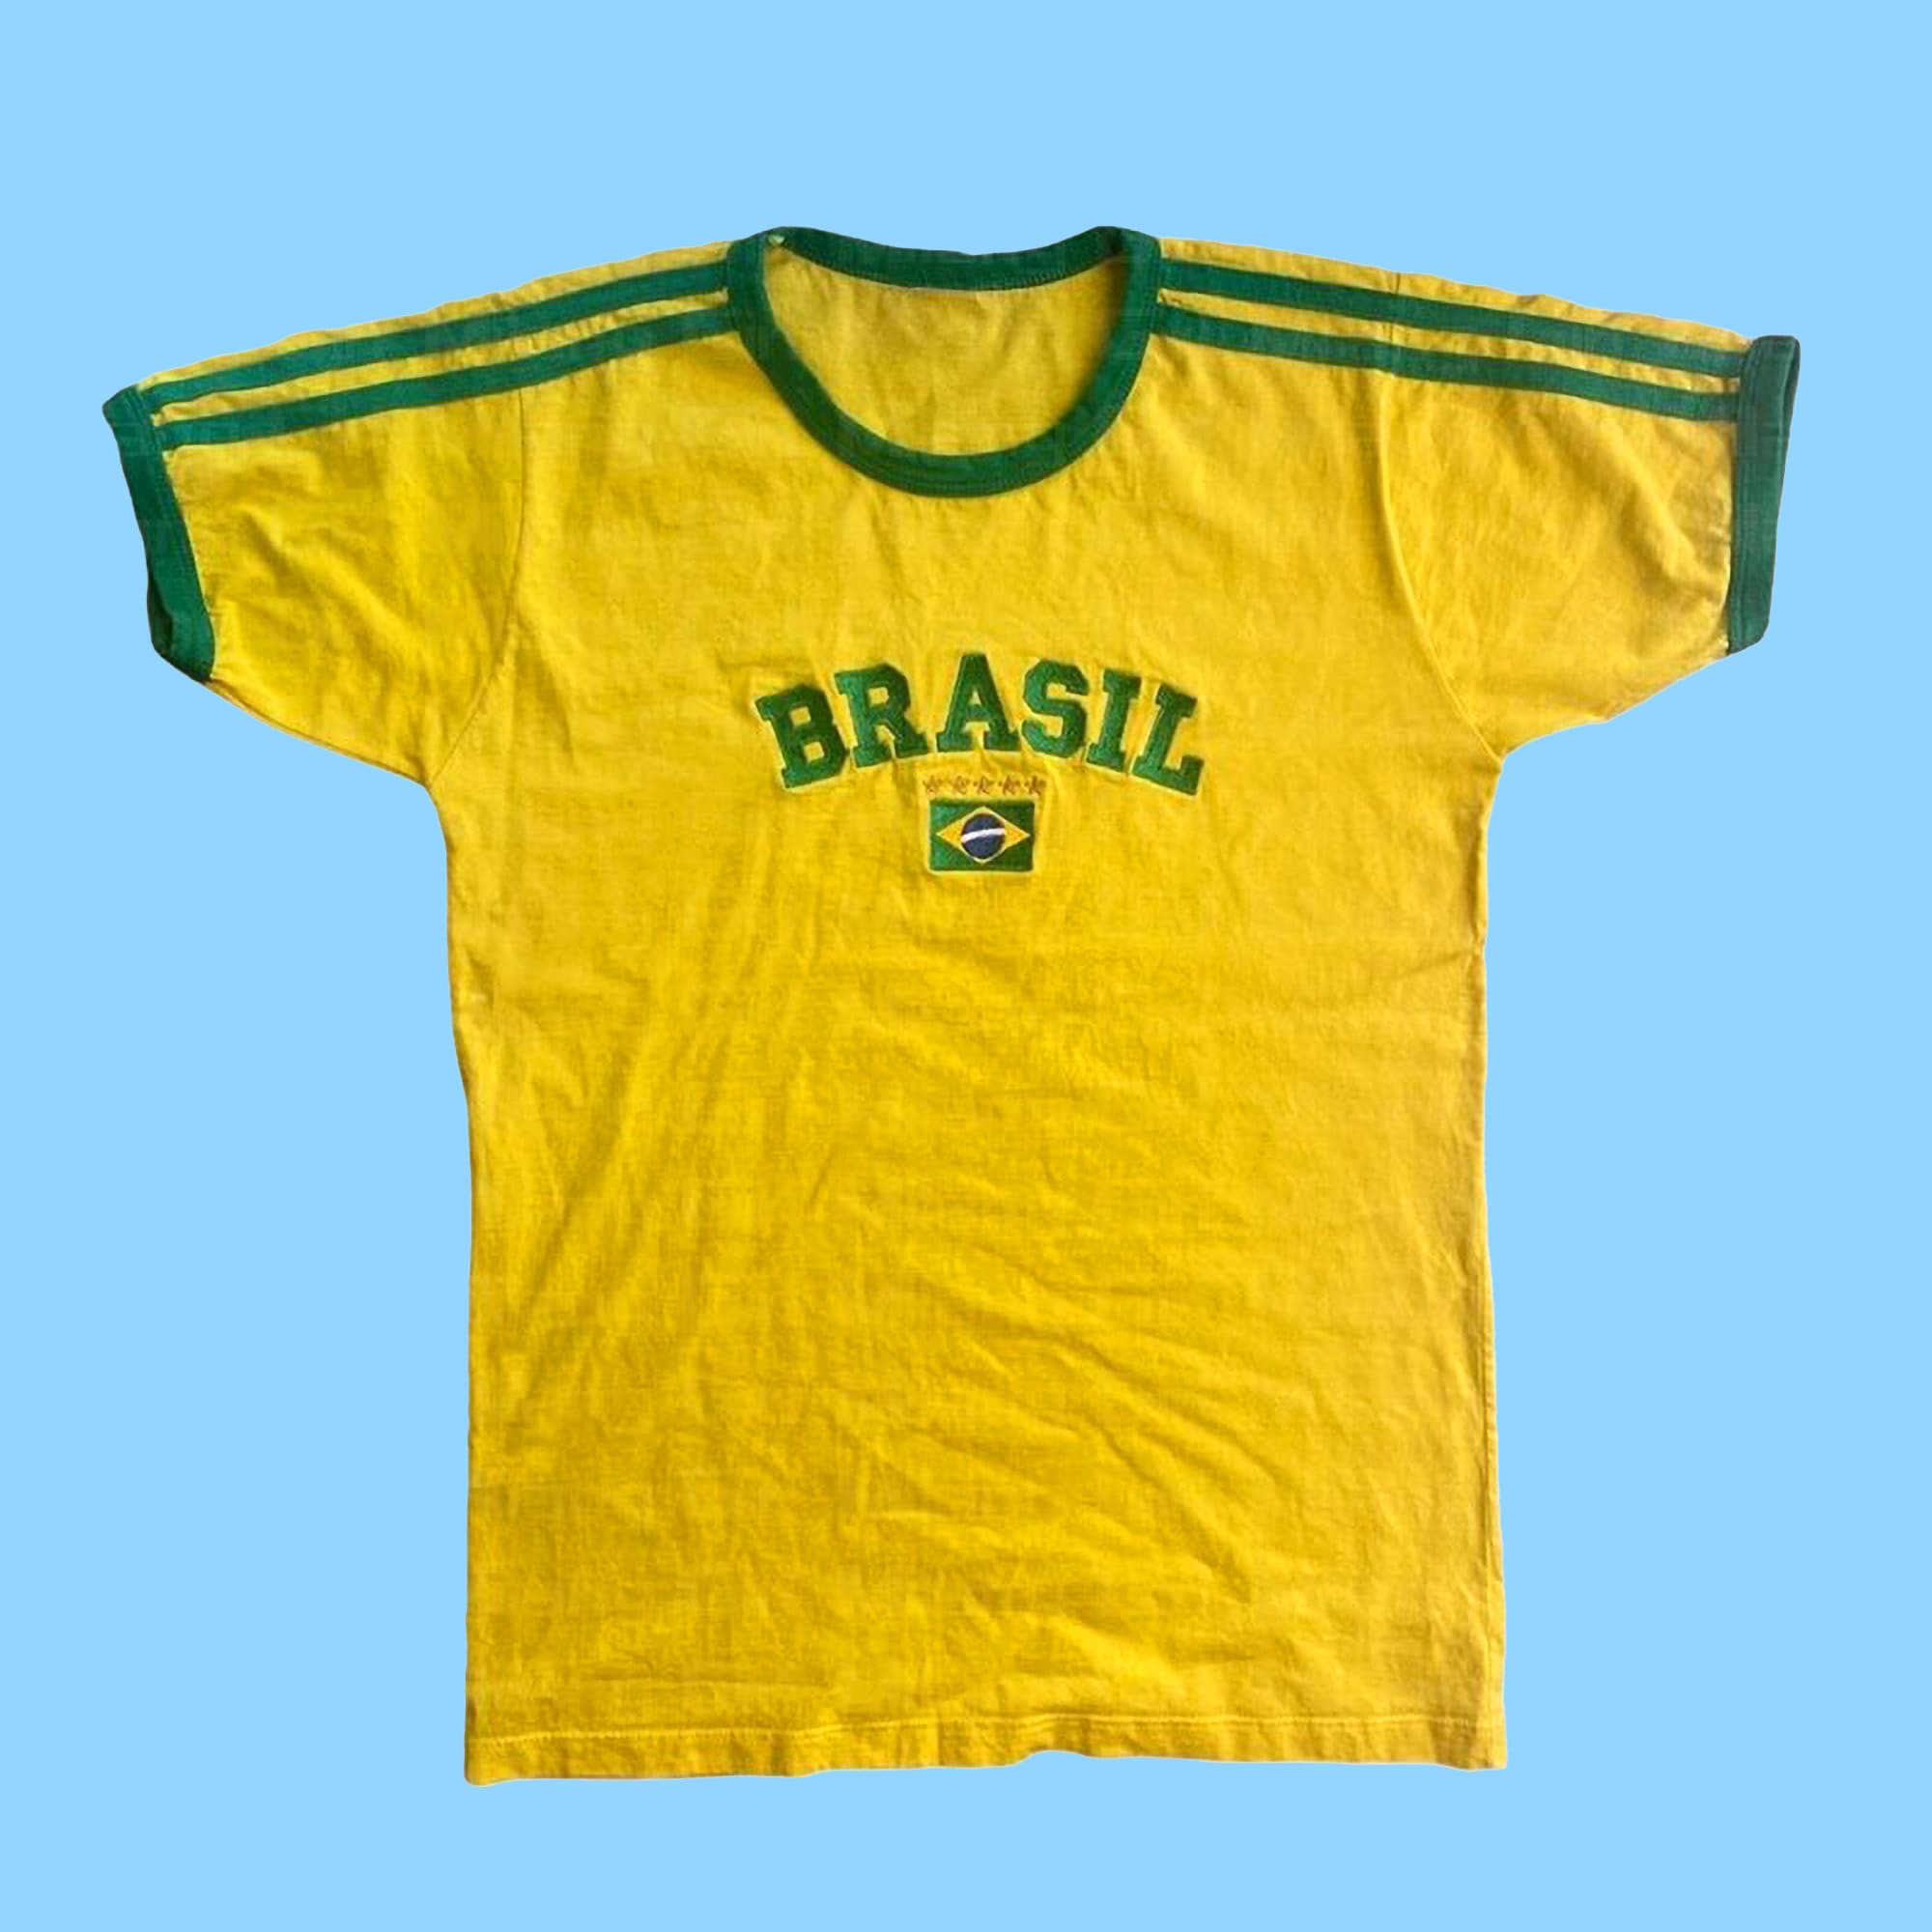 Brazil Shirt -  Canada